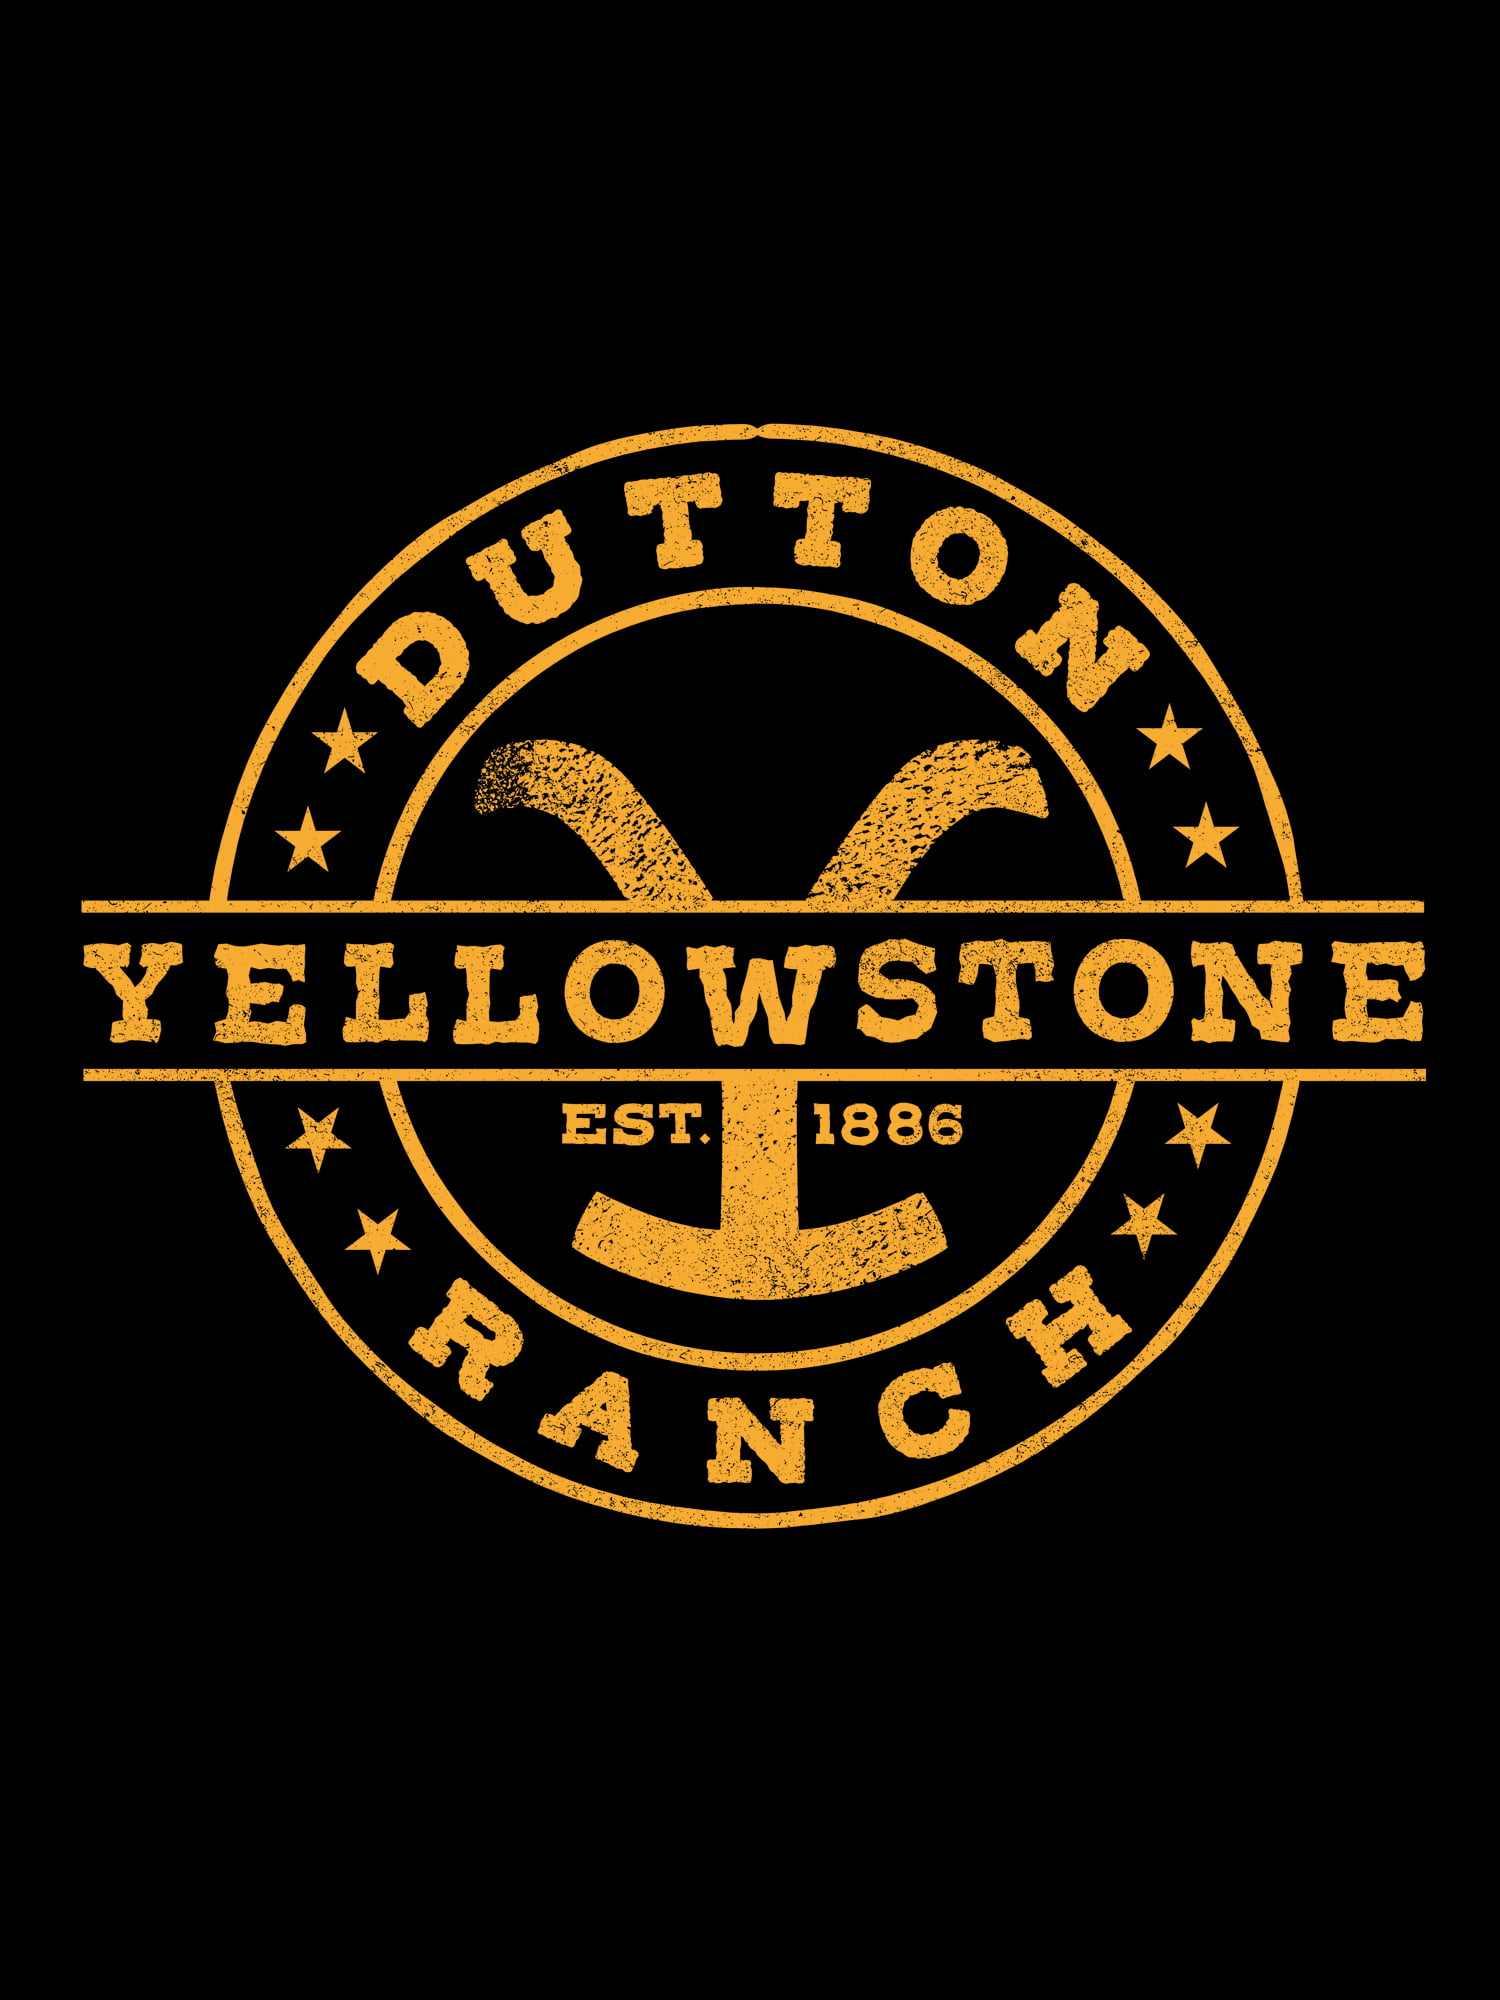 Yellowstone Dutton Ranch Red Bull Long Sleeve Sand Men's Hooded Sweatshirt  : Target